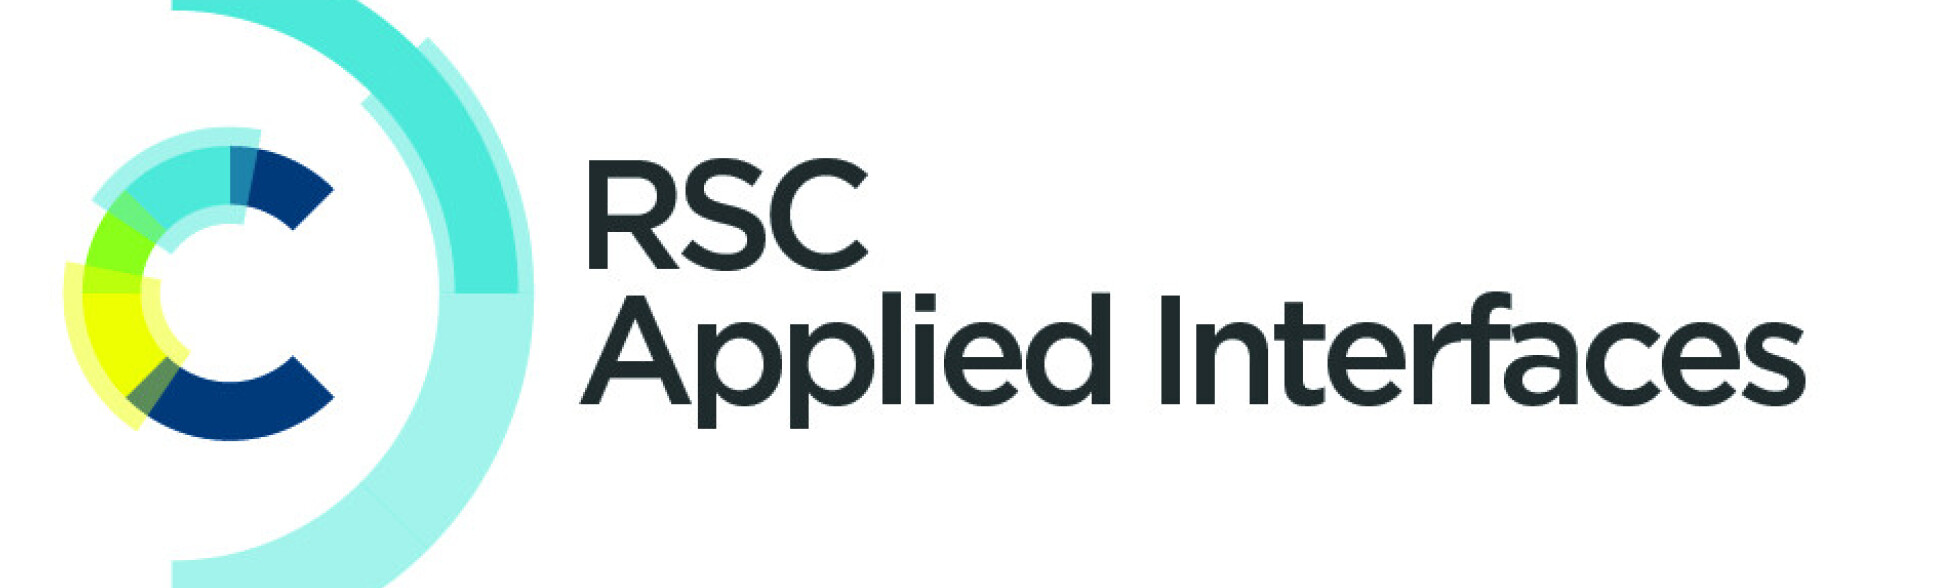 RSC Applied Interfaces